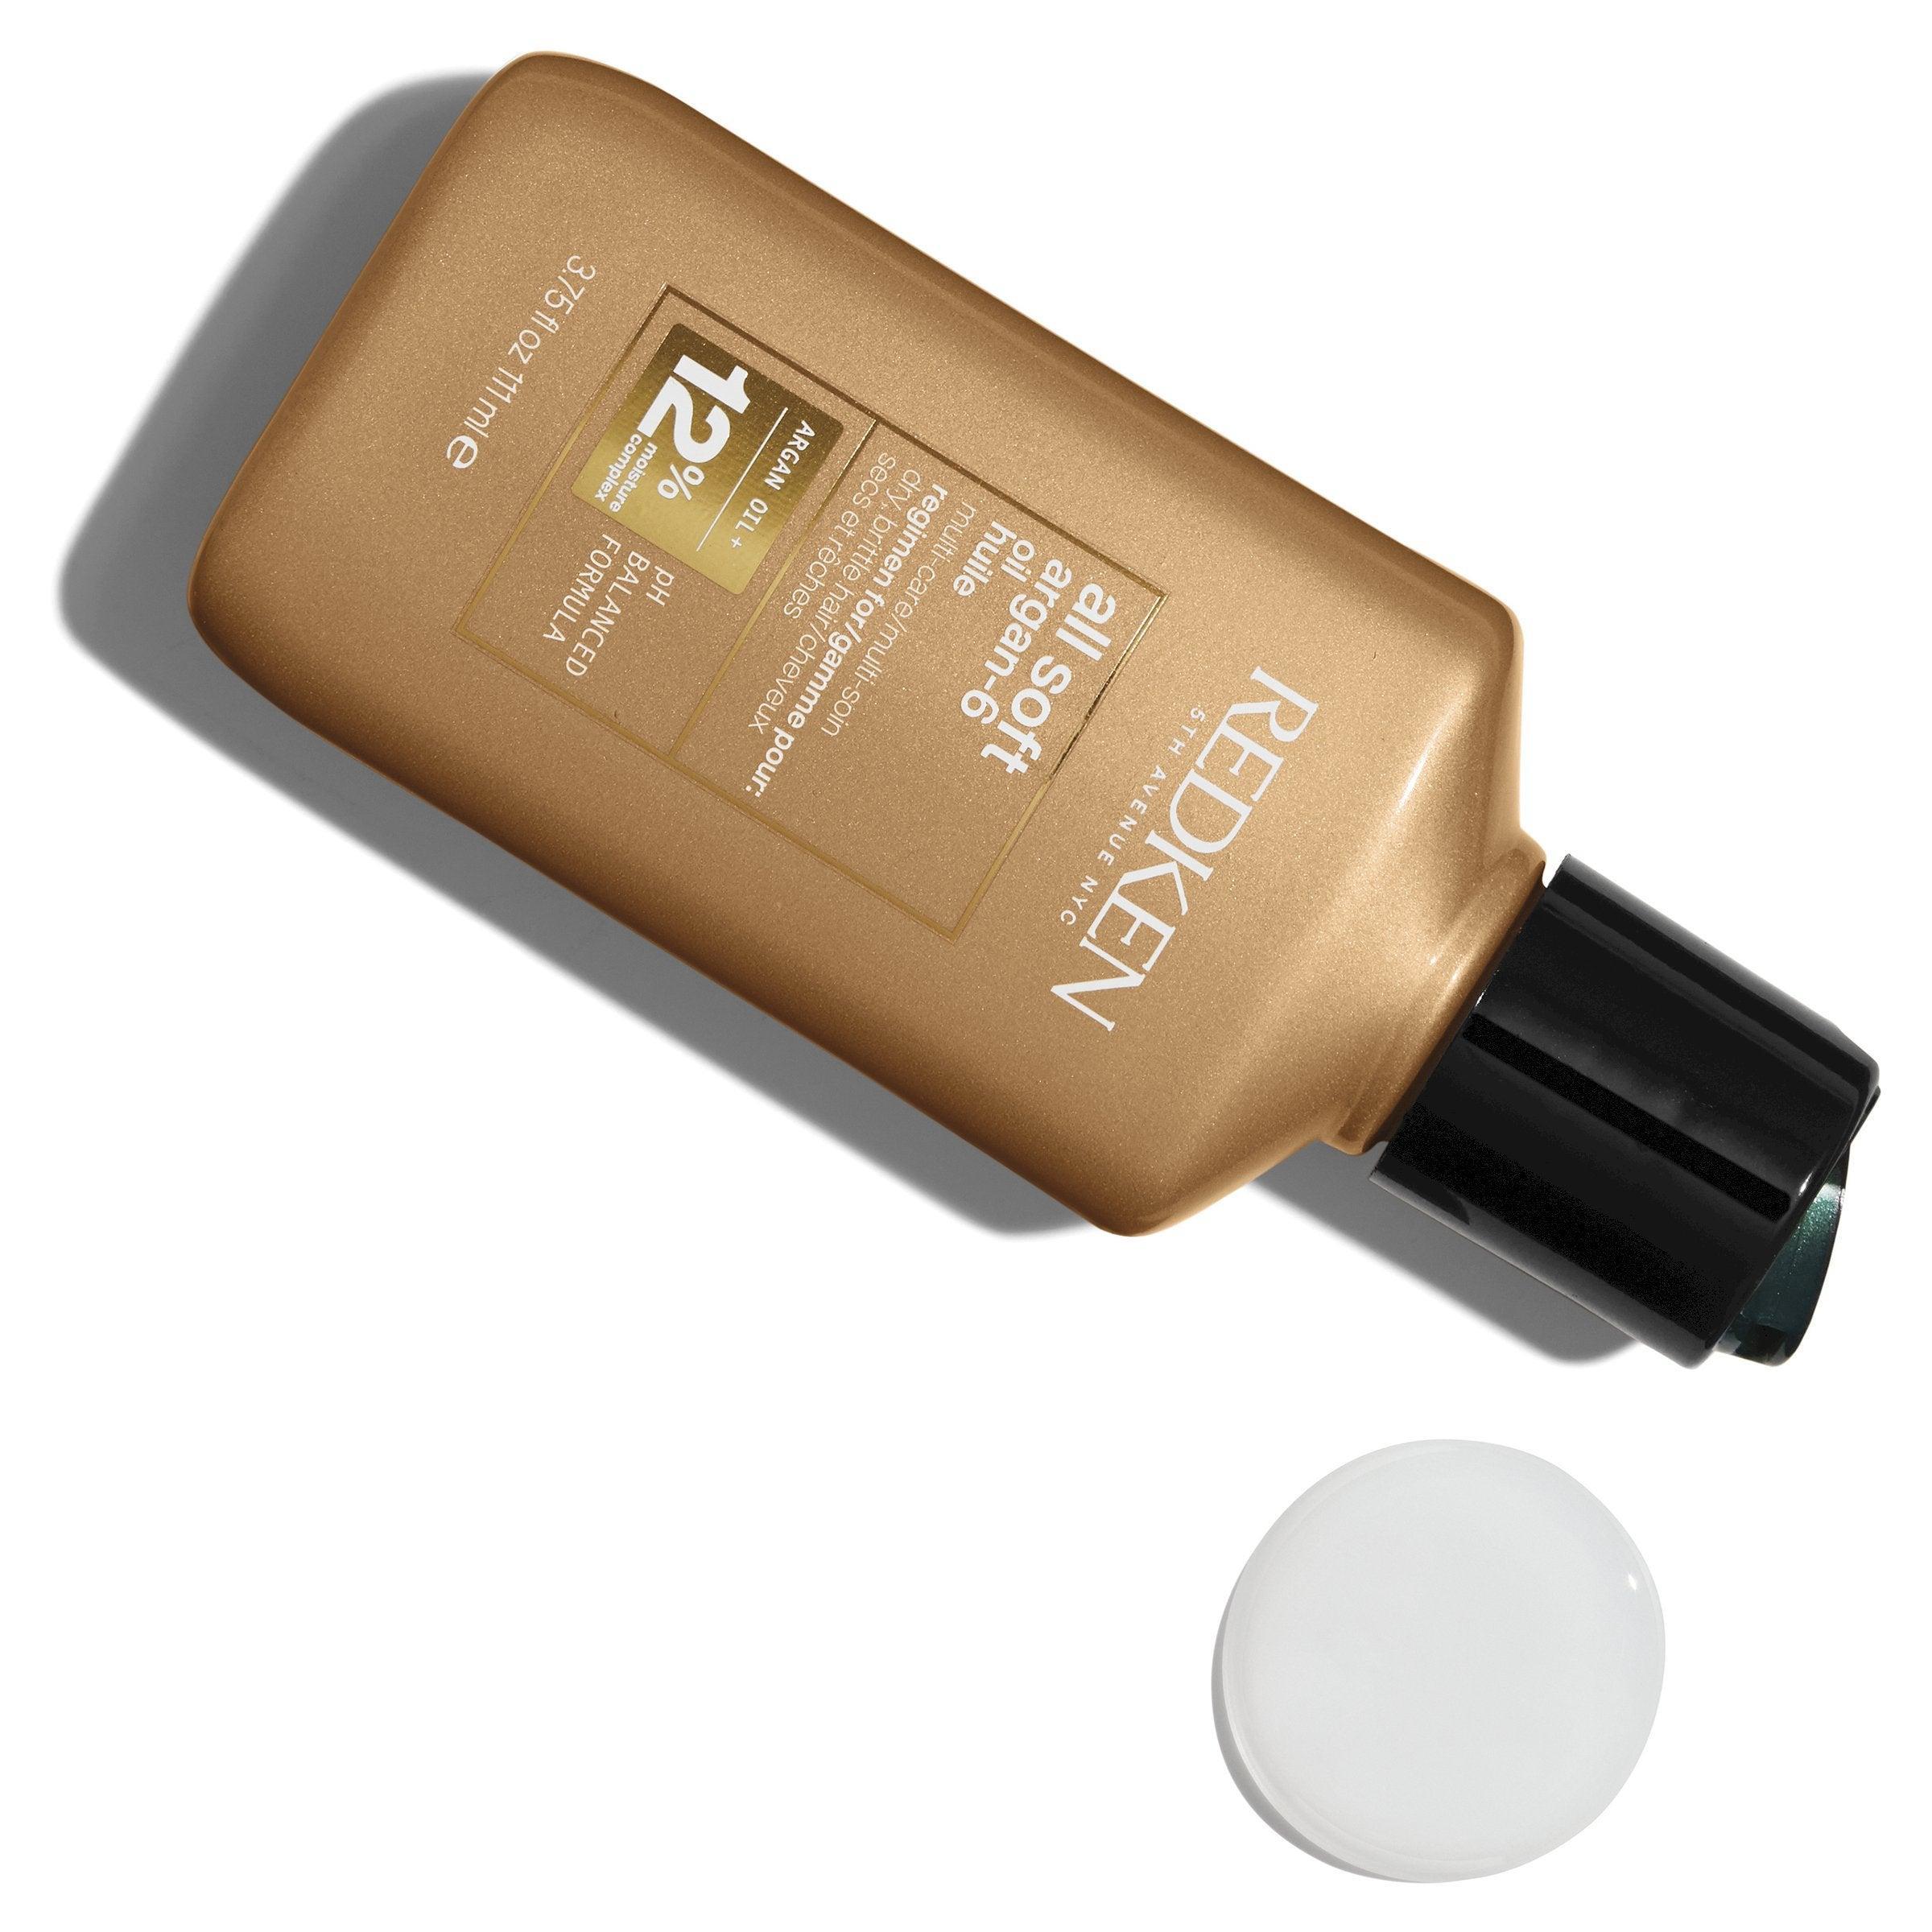 Redken All Soft Argan-6 Oil 90ml for Dry, Brittle Hair in need of Moisture